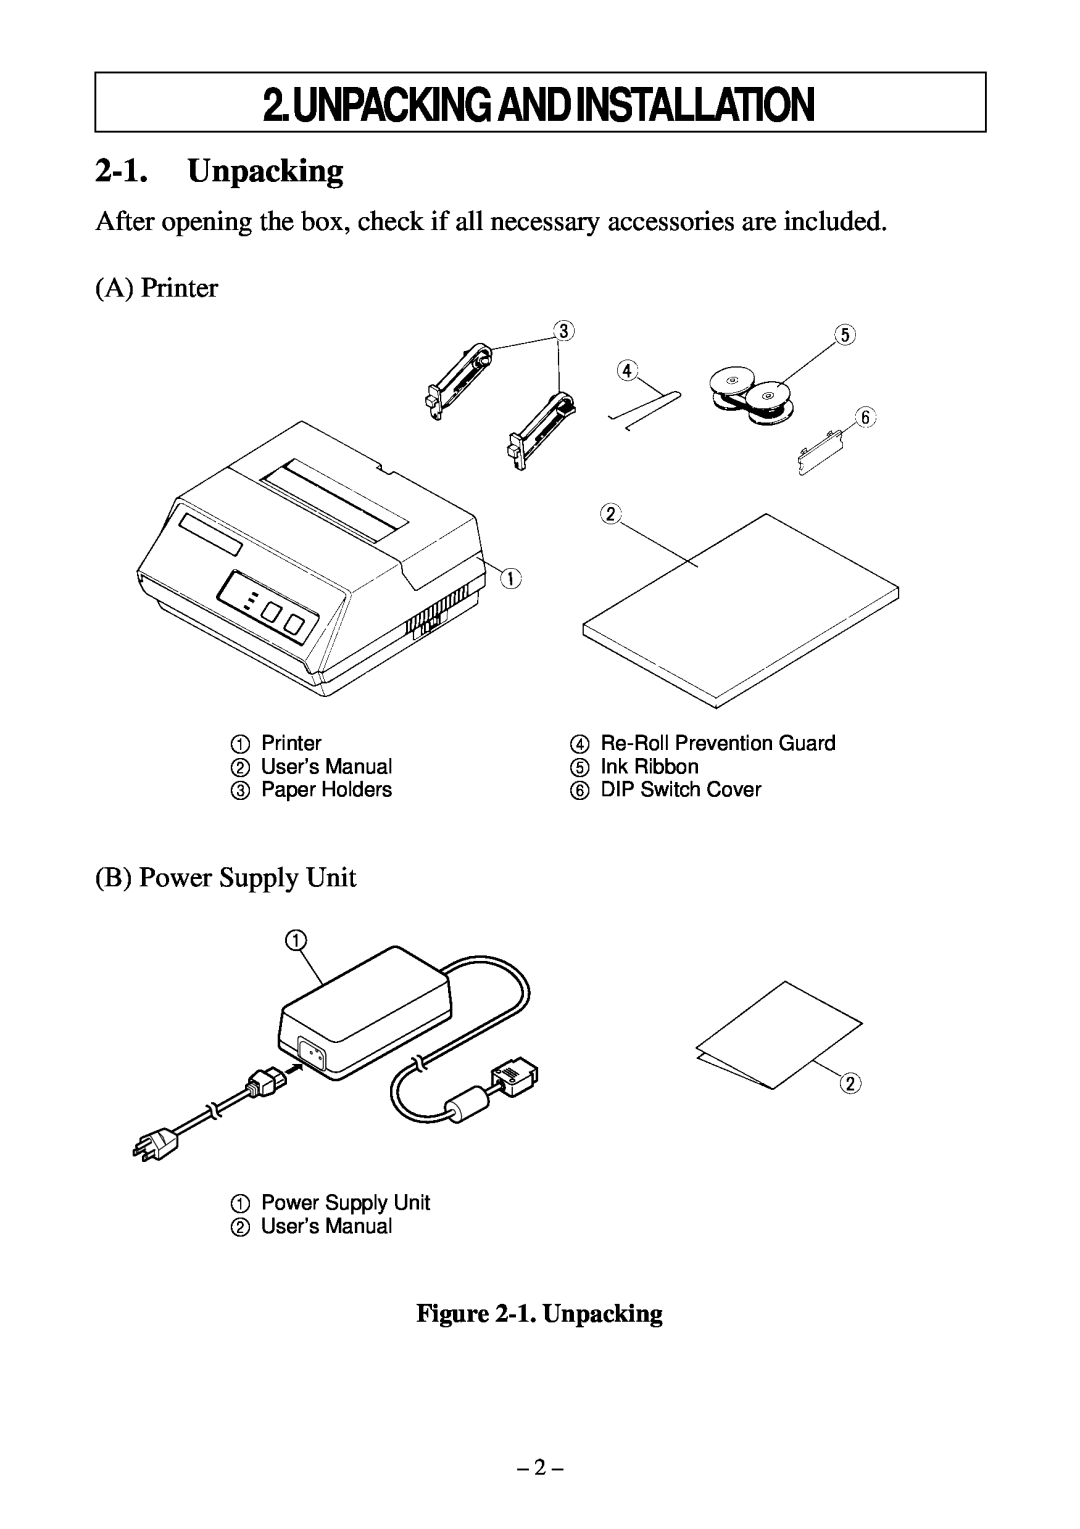 Star Micronics DP8340 Unpackingandinstallation, 1. Unpacking, Printer, Re-Roll Prevention Guard, User’s Manual, Ink Ribbon 